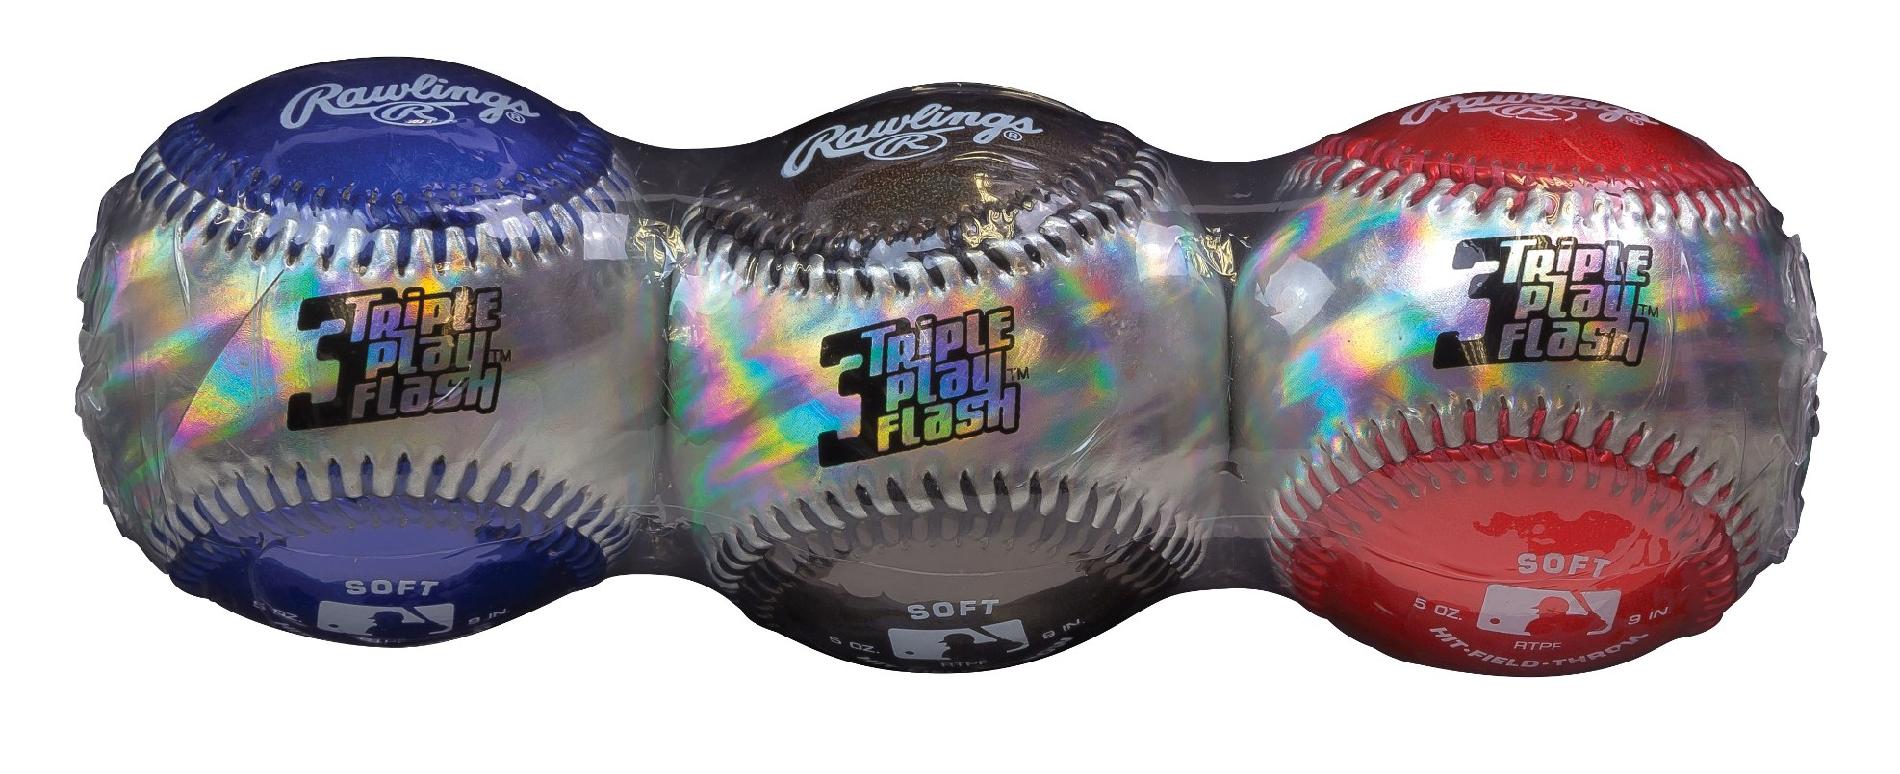 Triple PLay Flash Baseball - 3 Pack